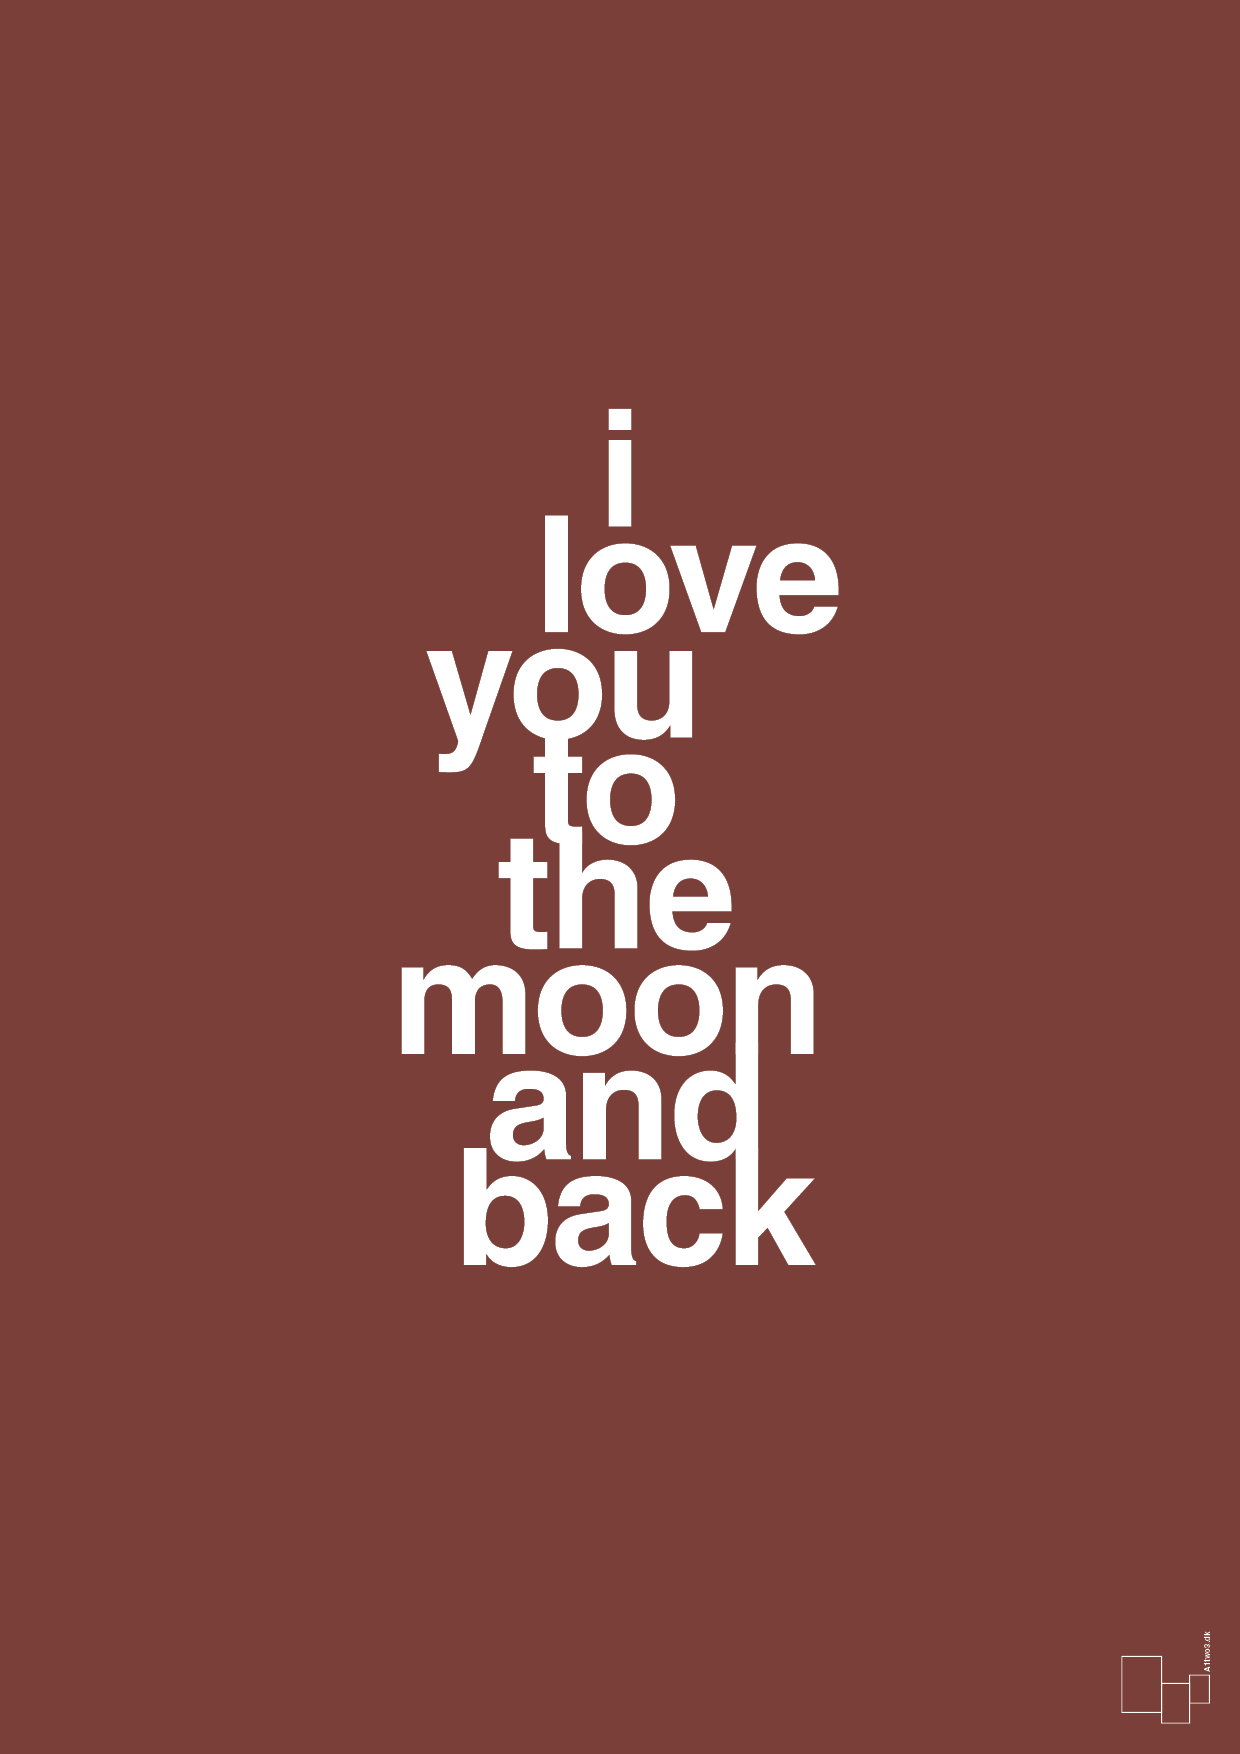 i love you to the moon and back - Plakat med Ordsprog i Red Pepper